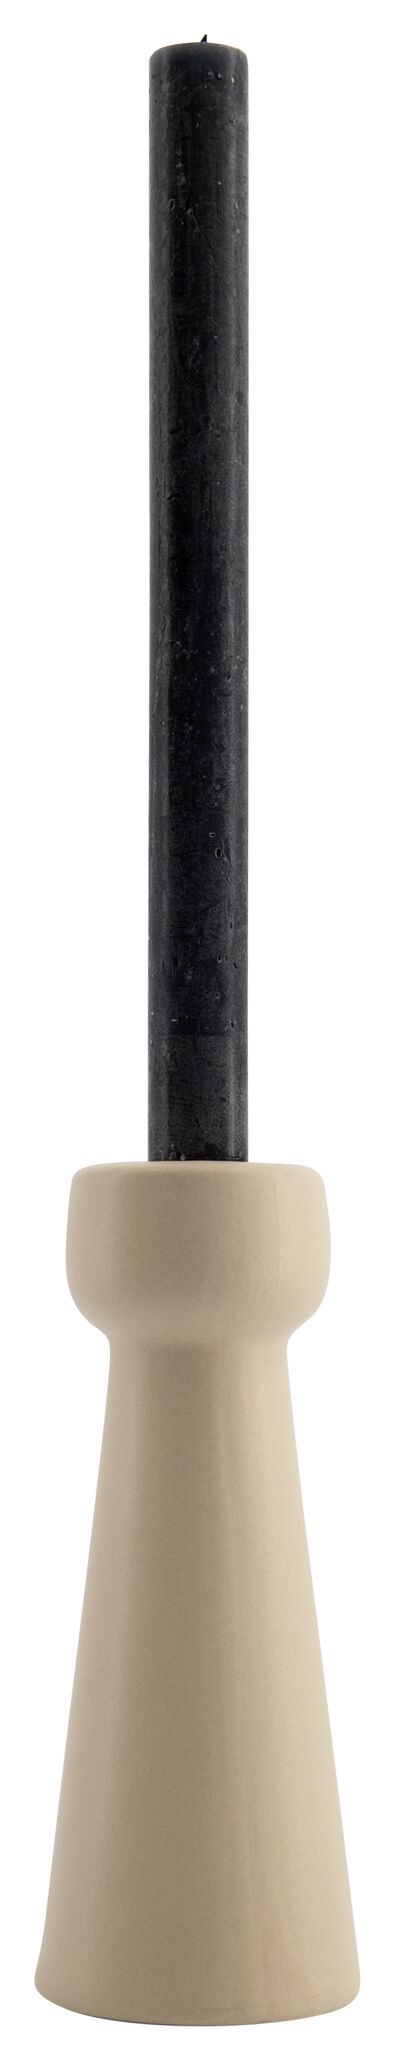 bougeoir 18.5cm cône sable - 13321166 - HEMA